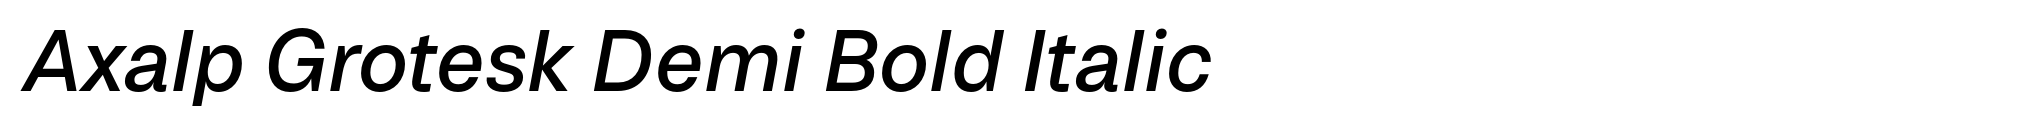 Axalp Grotesk Demi Bold Italic image